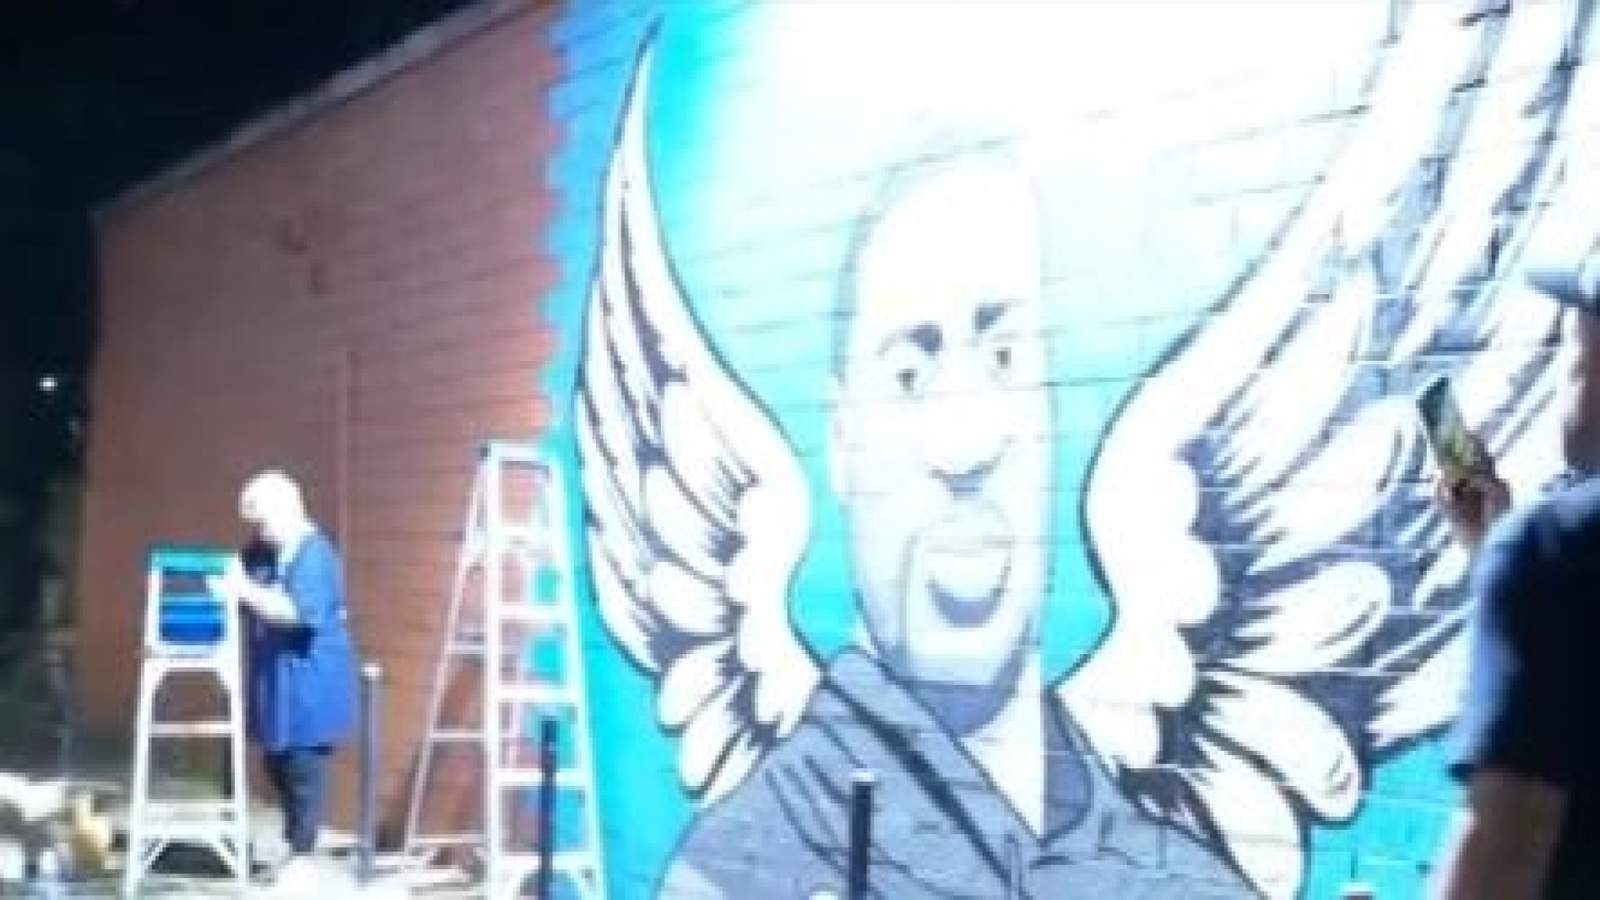 Houston artist Donkeeboy creates mural to honor George Floyd